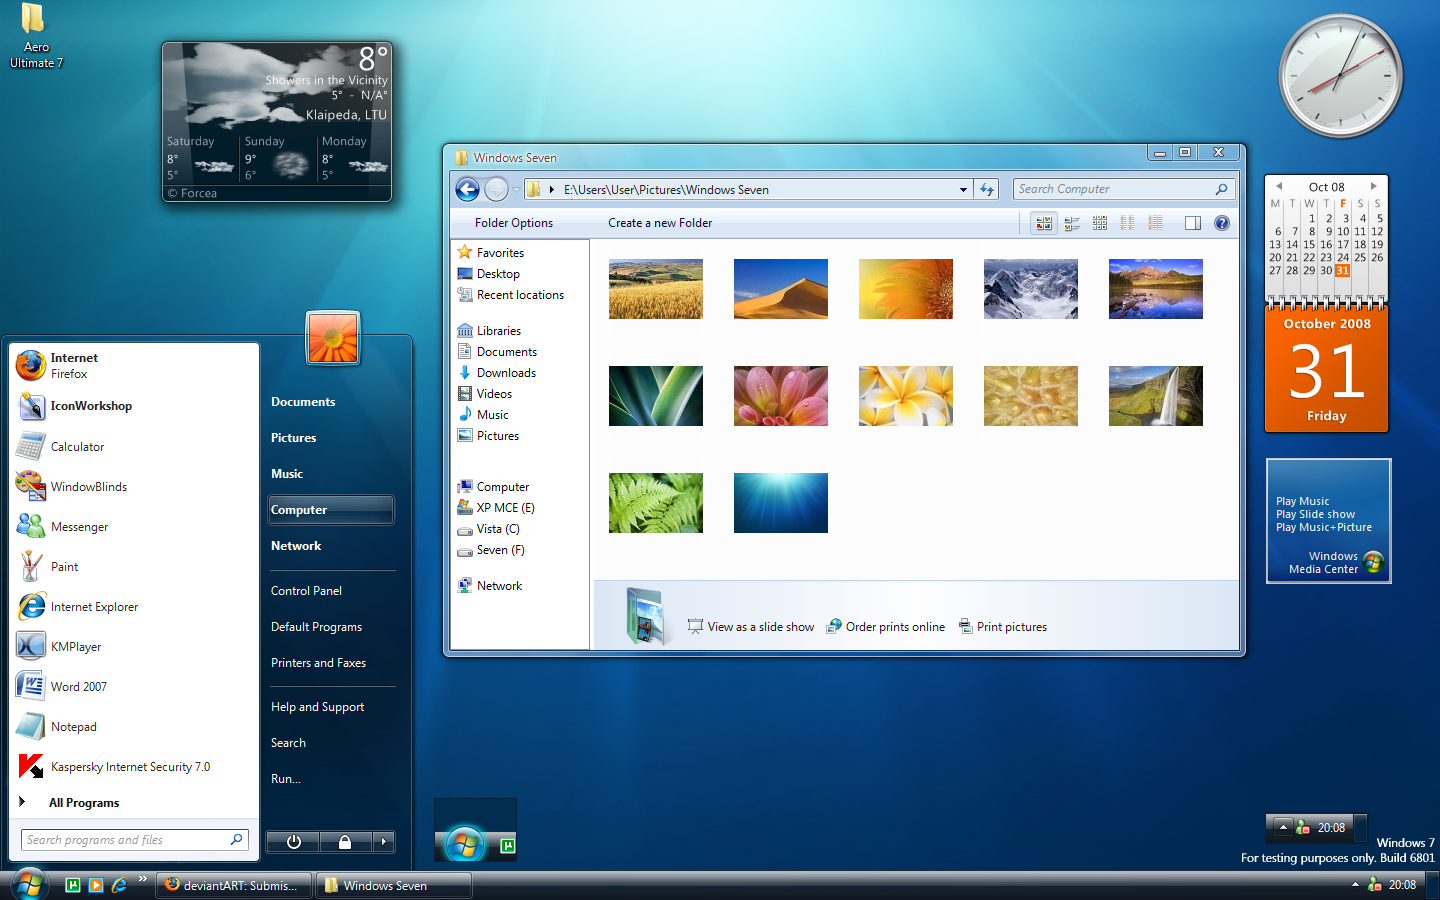 Windows 7 Ultimate Download